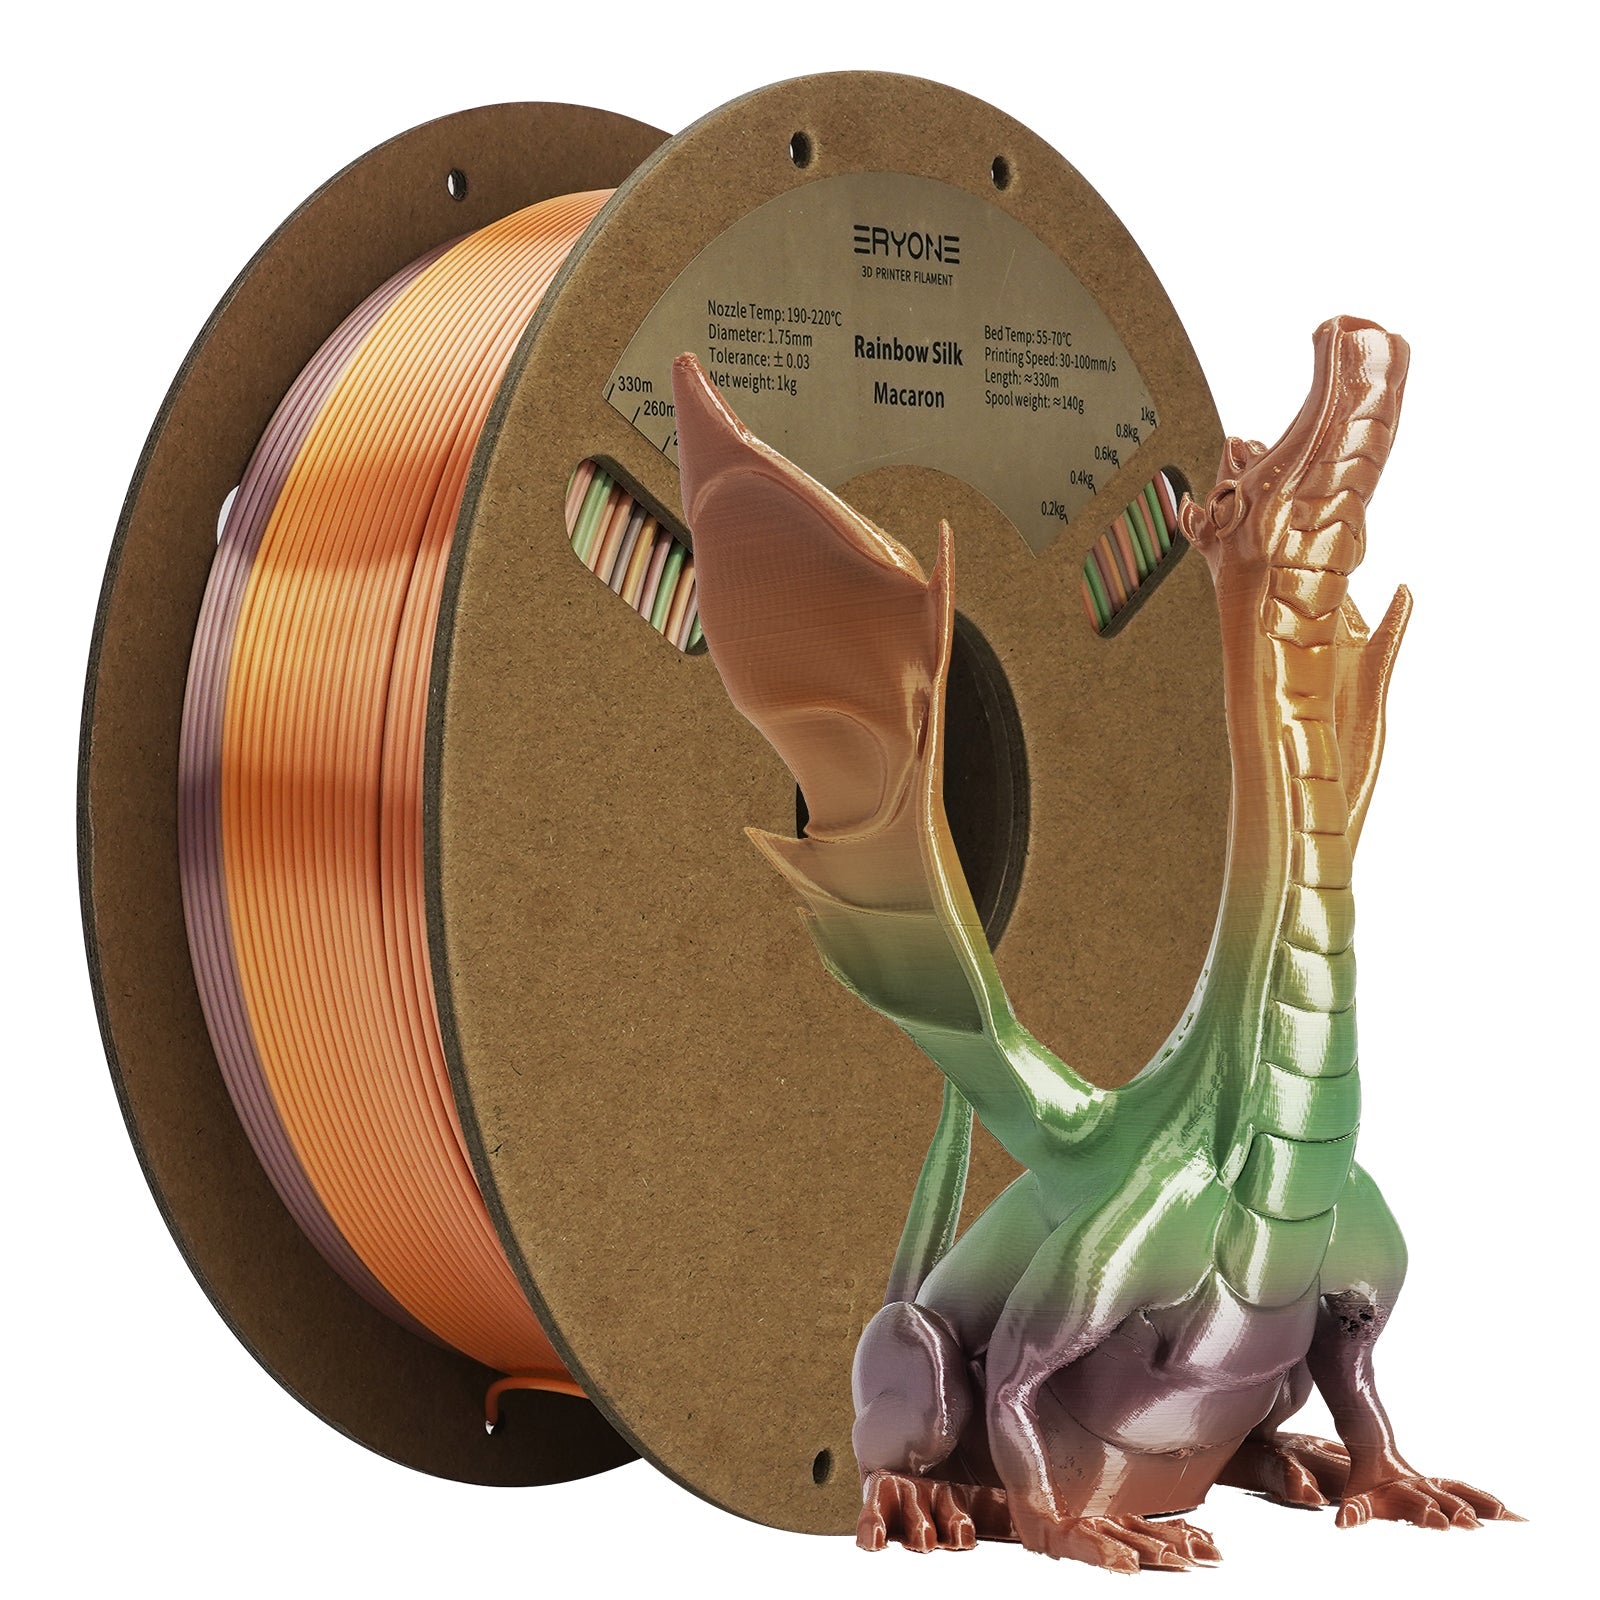 ERYONE Macaron Rainbow Filament PLA 1.75 mm for 3D Printer, +/-0.05 mm, 1 kg / Spool